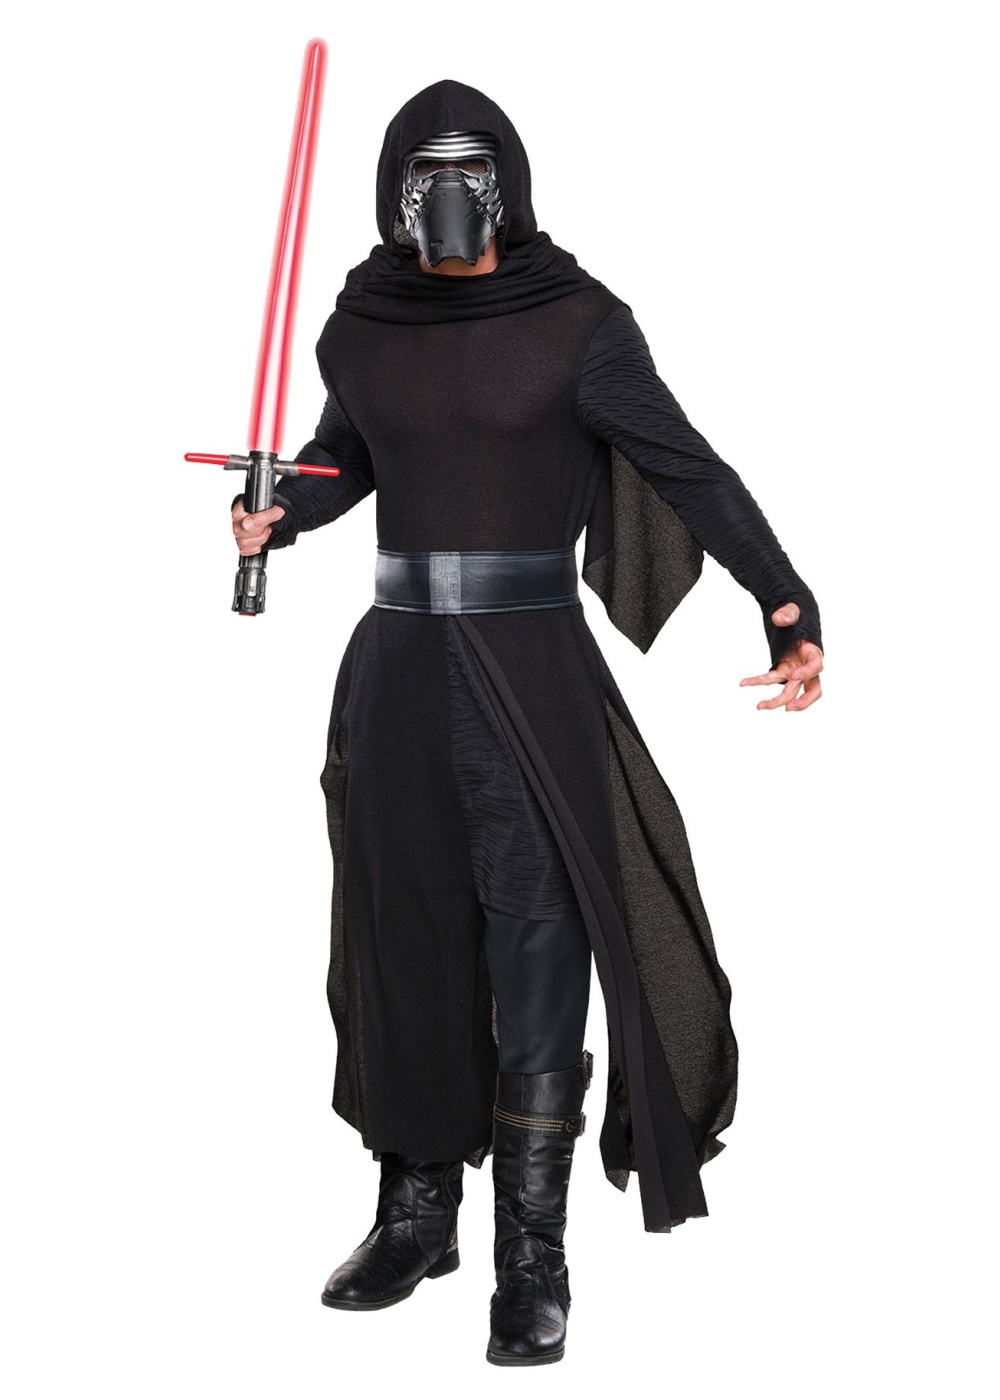  Star Wars Kylo Ren Costume